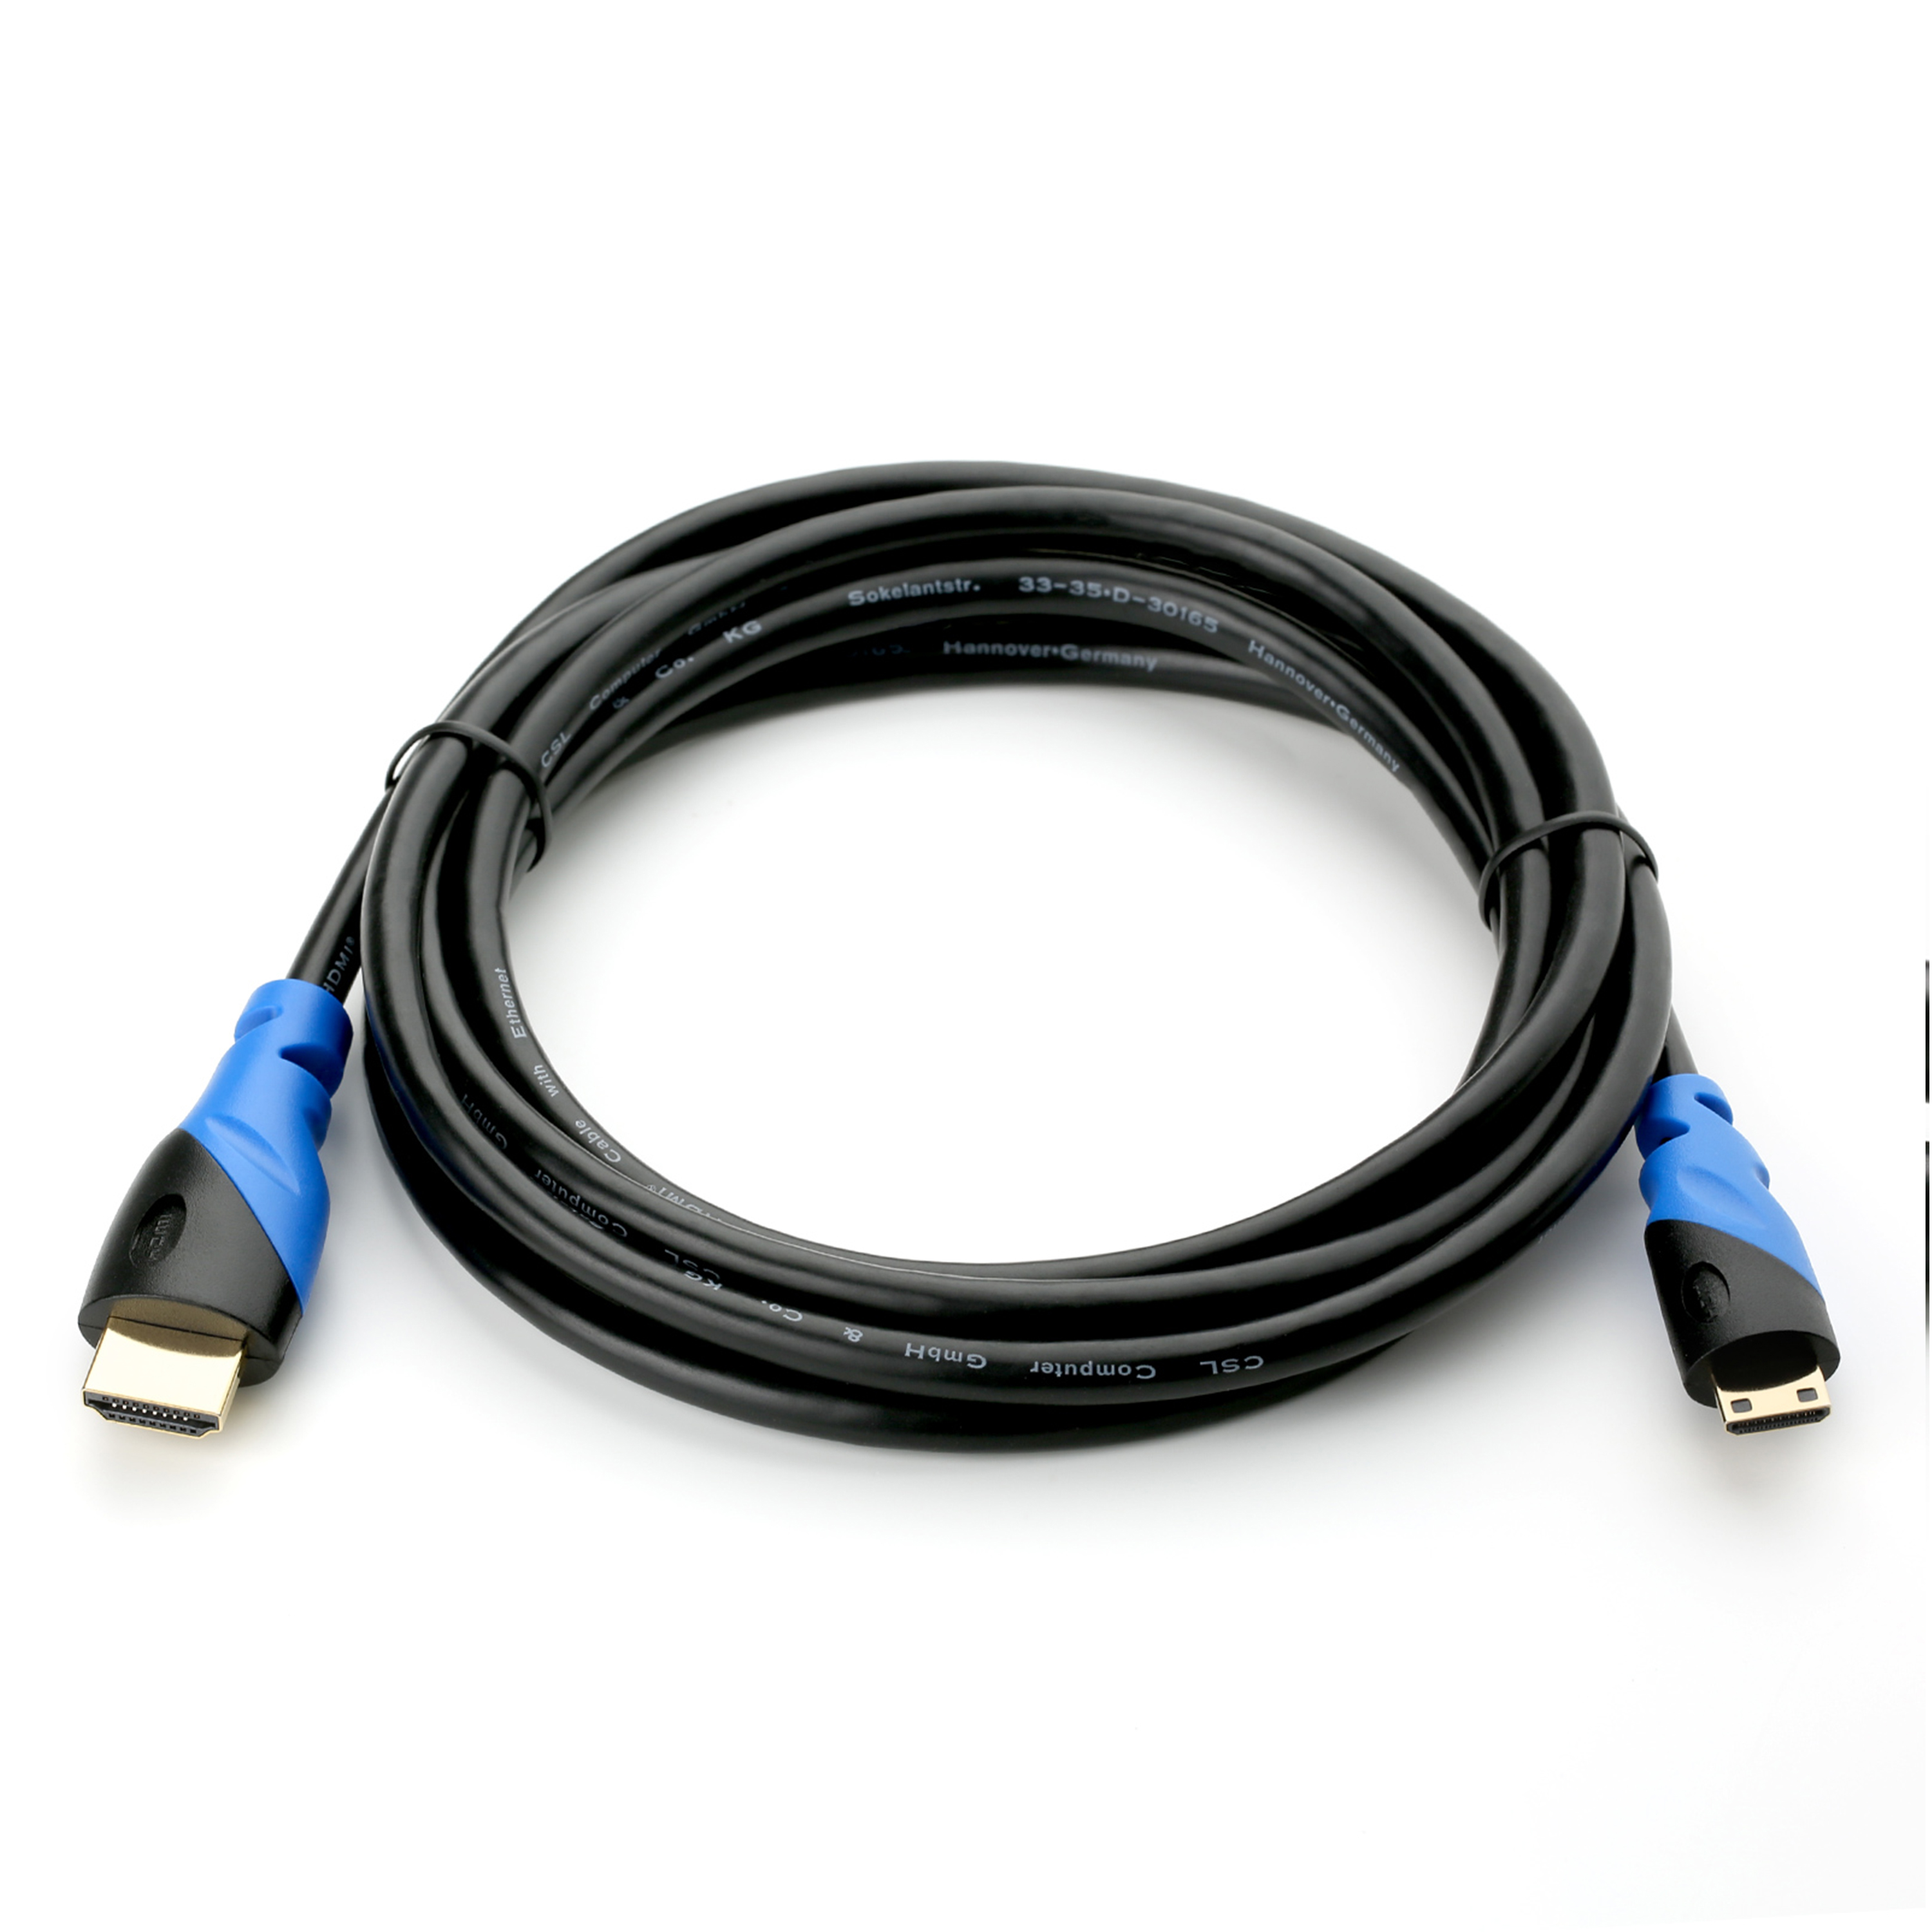 CSL MiniHDMI 2.0 Kabel, schwarz/blau Kabel, 1,5m HDMI